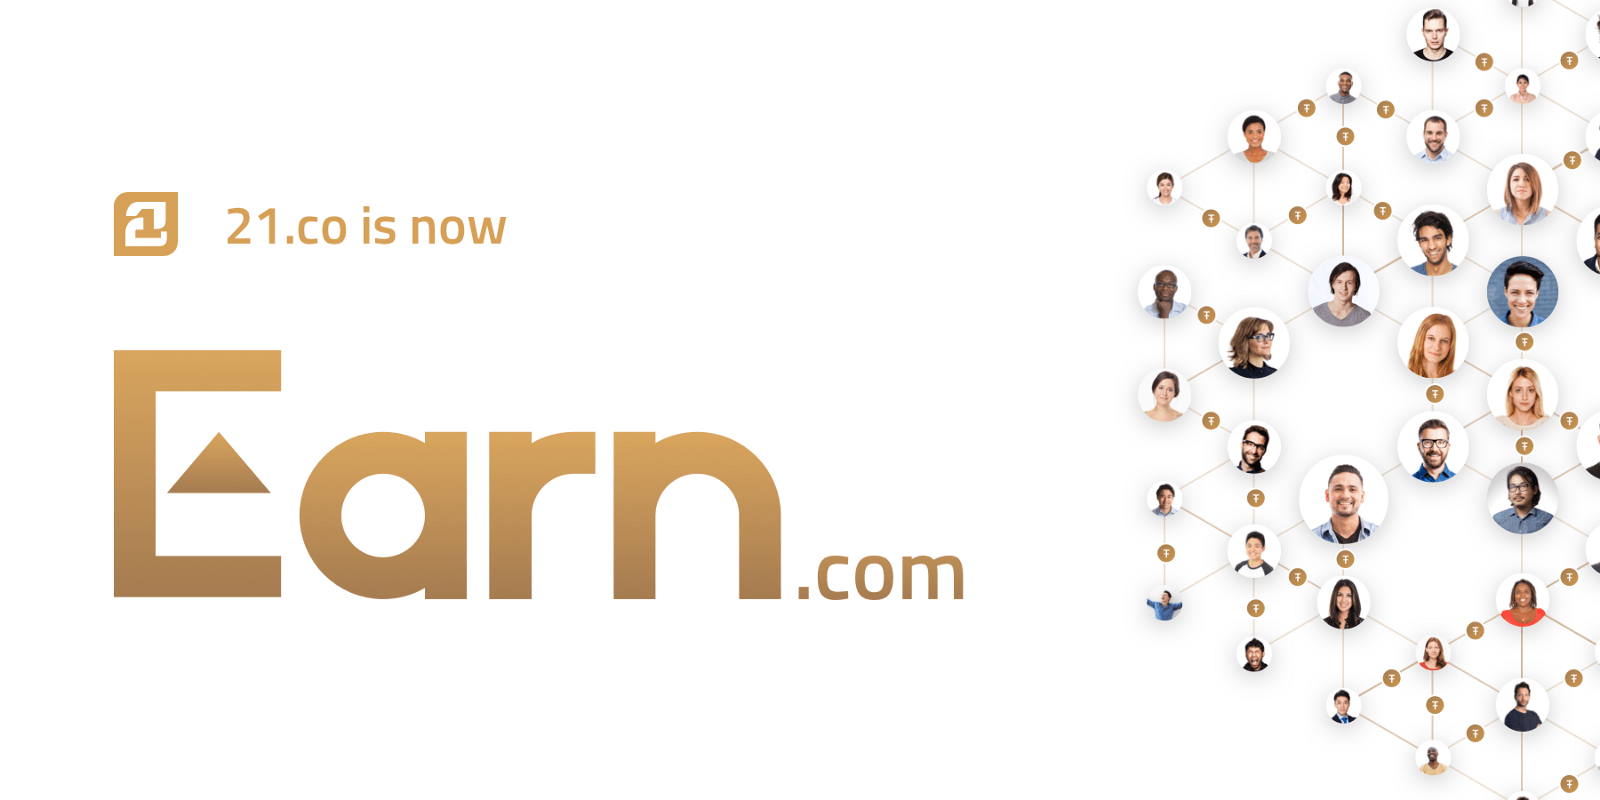 Need Money Logo - 21.co is now Earn.com – news.earn.com